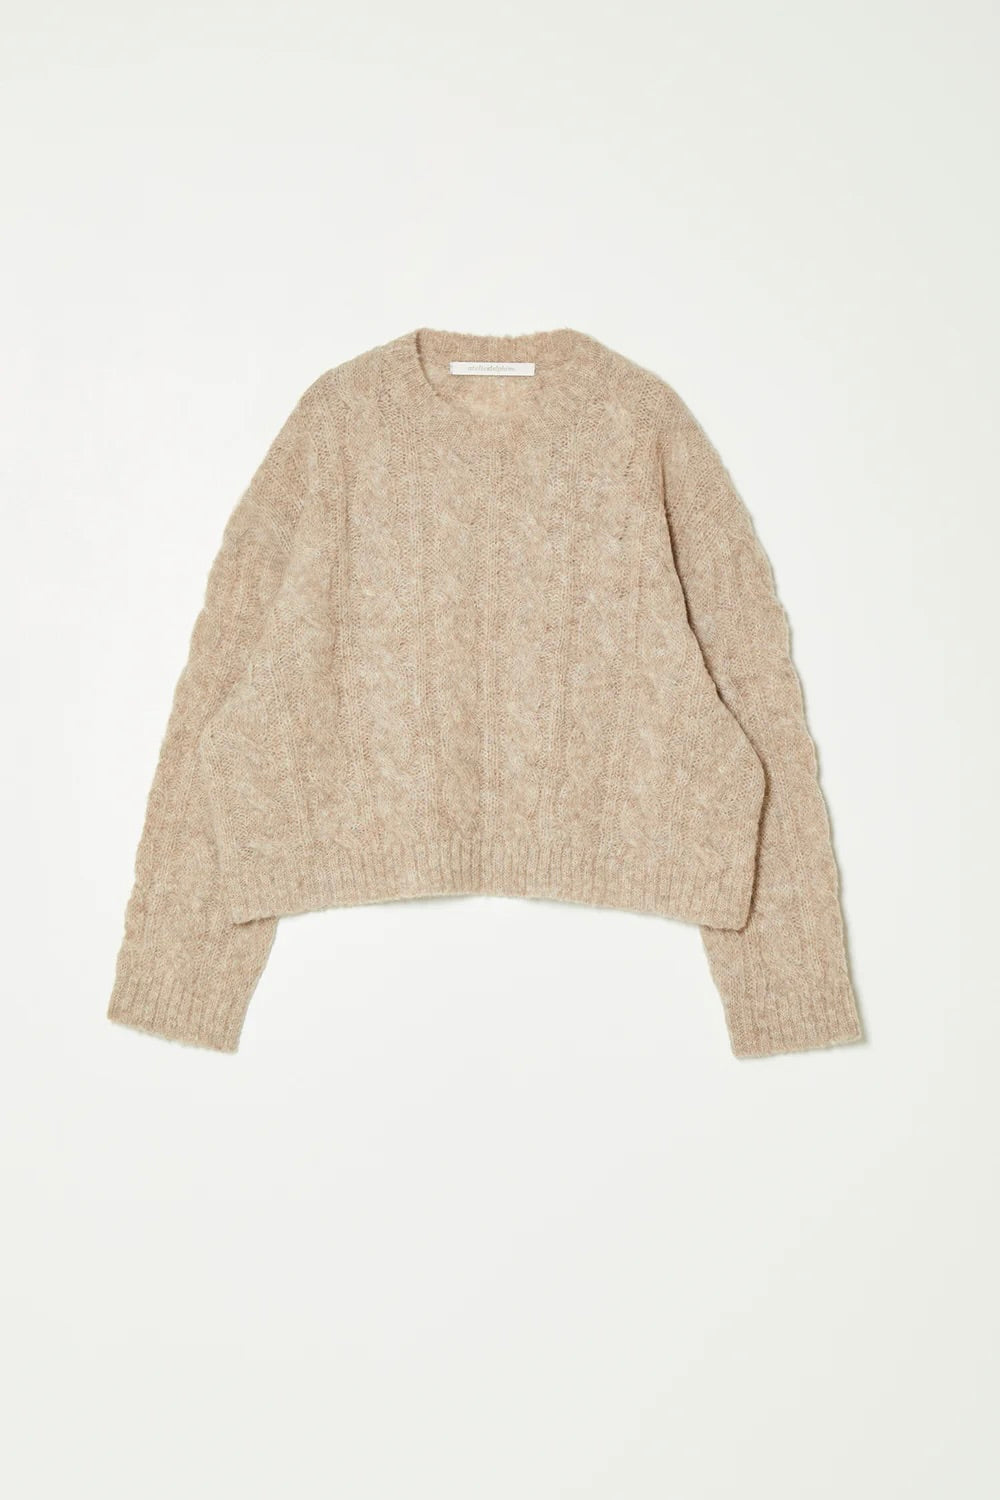 Agata Sweater / Sand